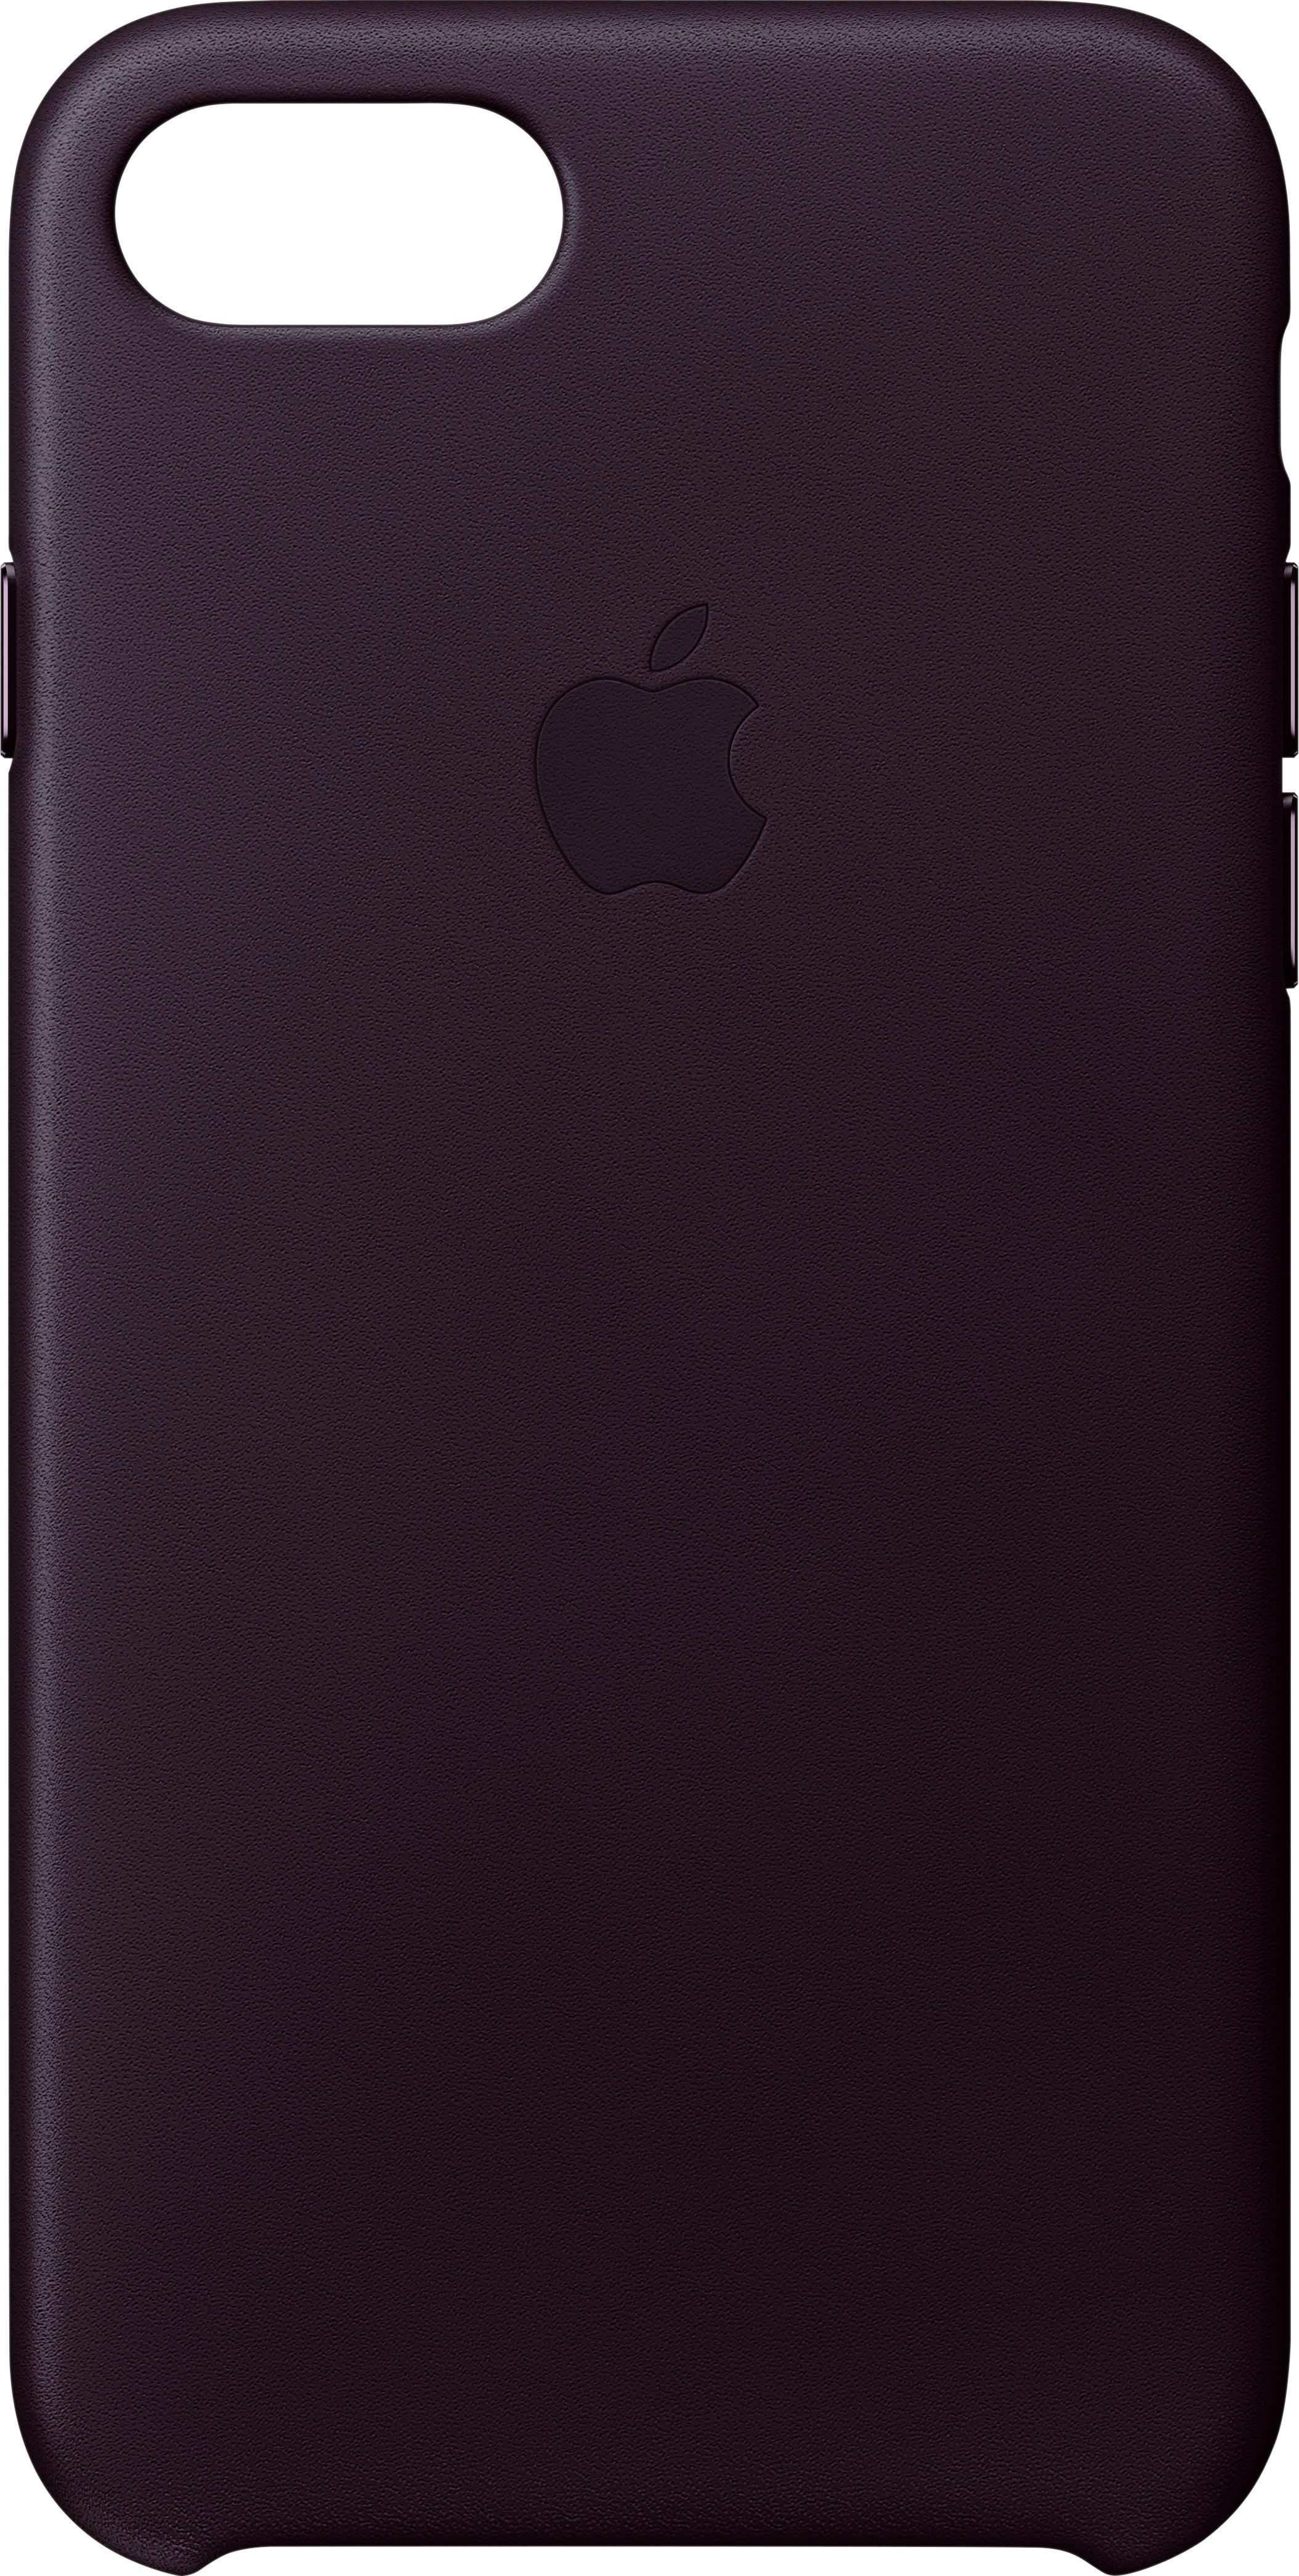 Apple iPhone® 8/7 Leather Case Dark Aubergine  - Best Buy